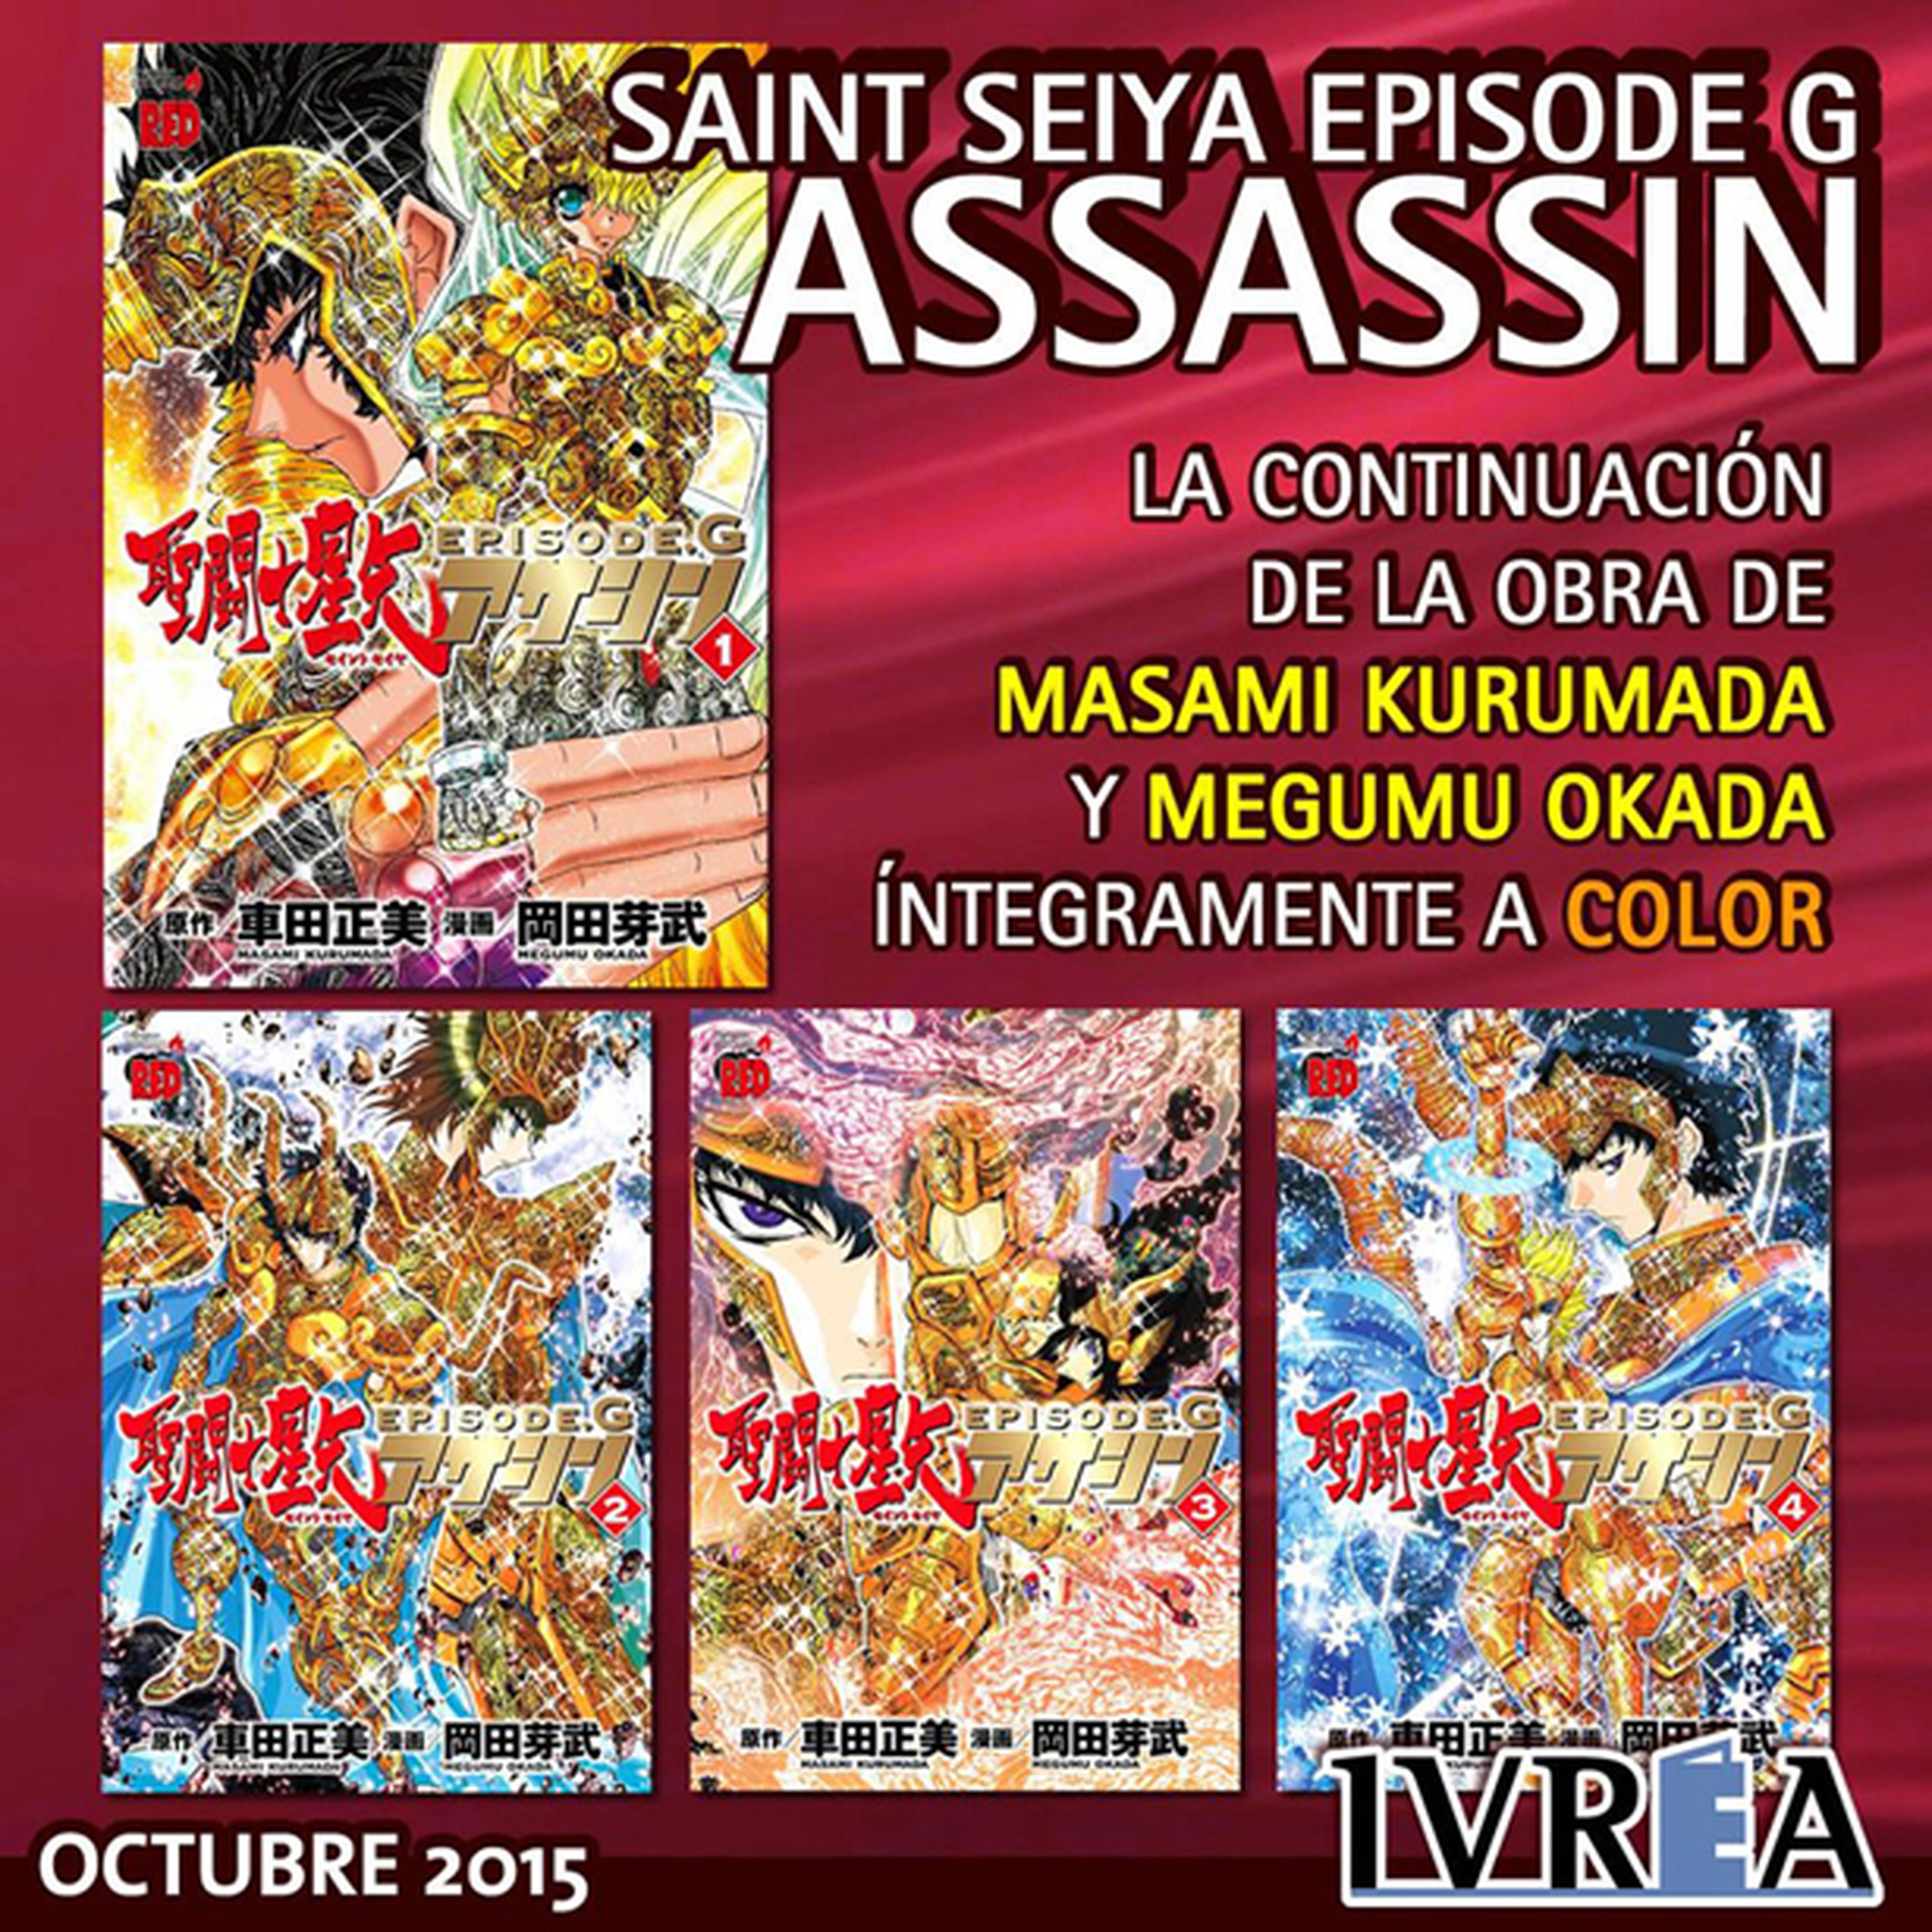 Saint Seiya Episode G - Assassin, en octubre